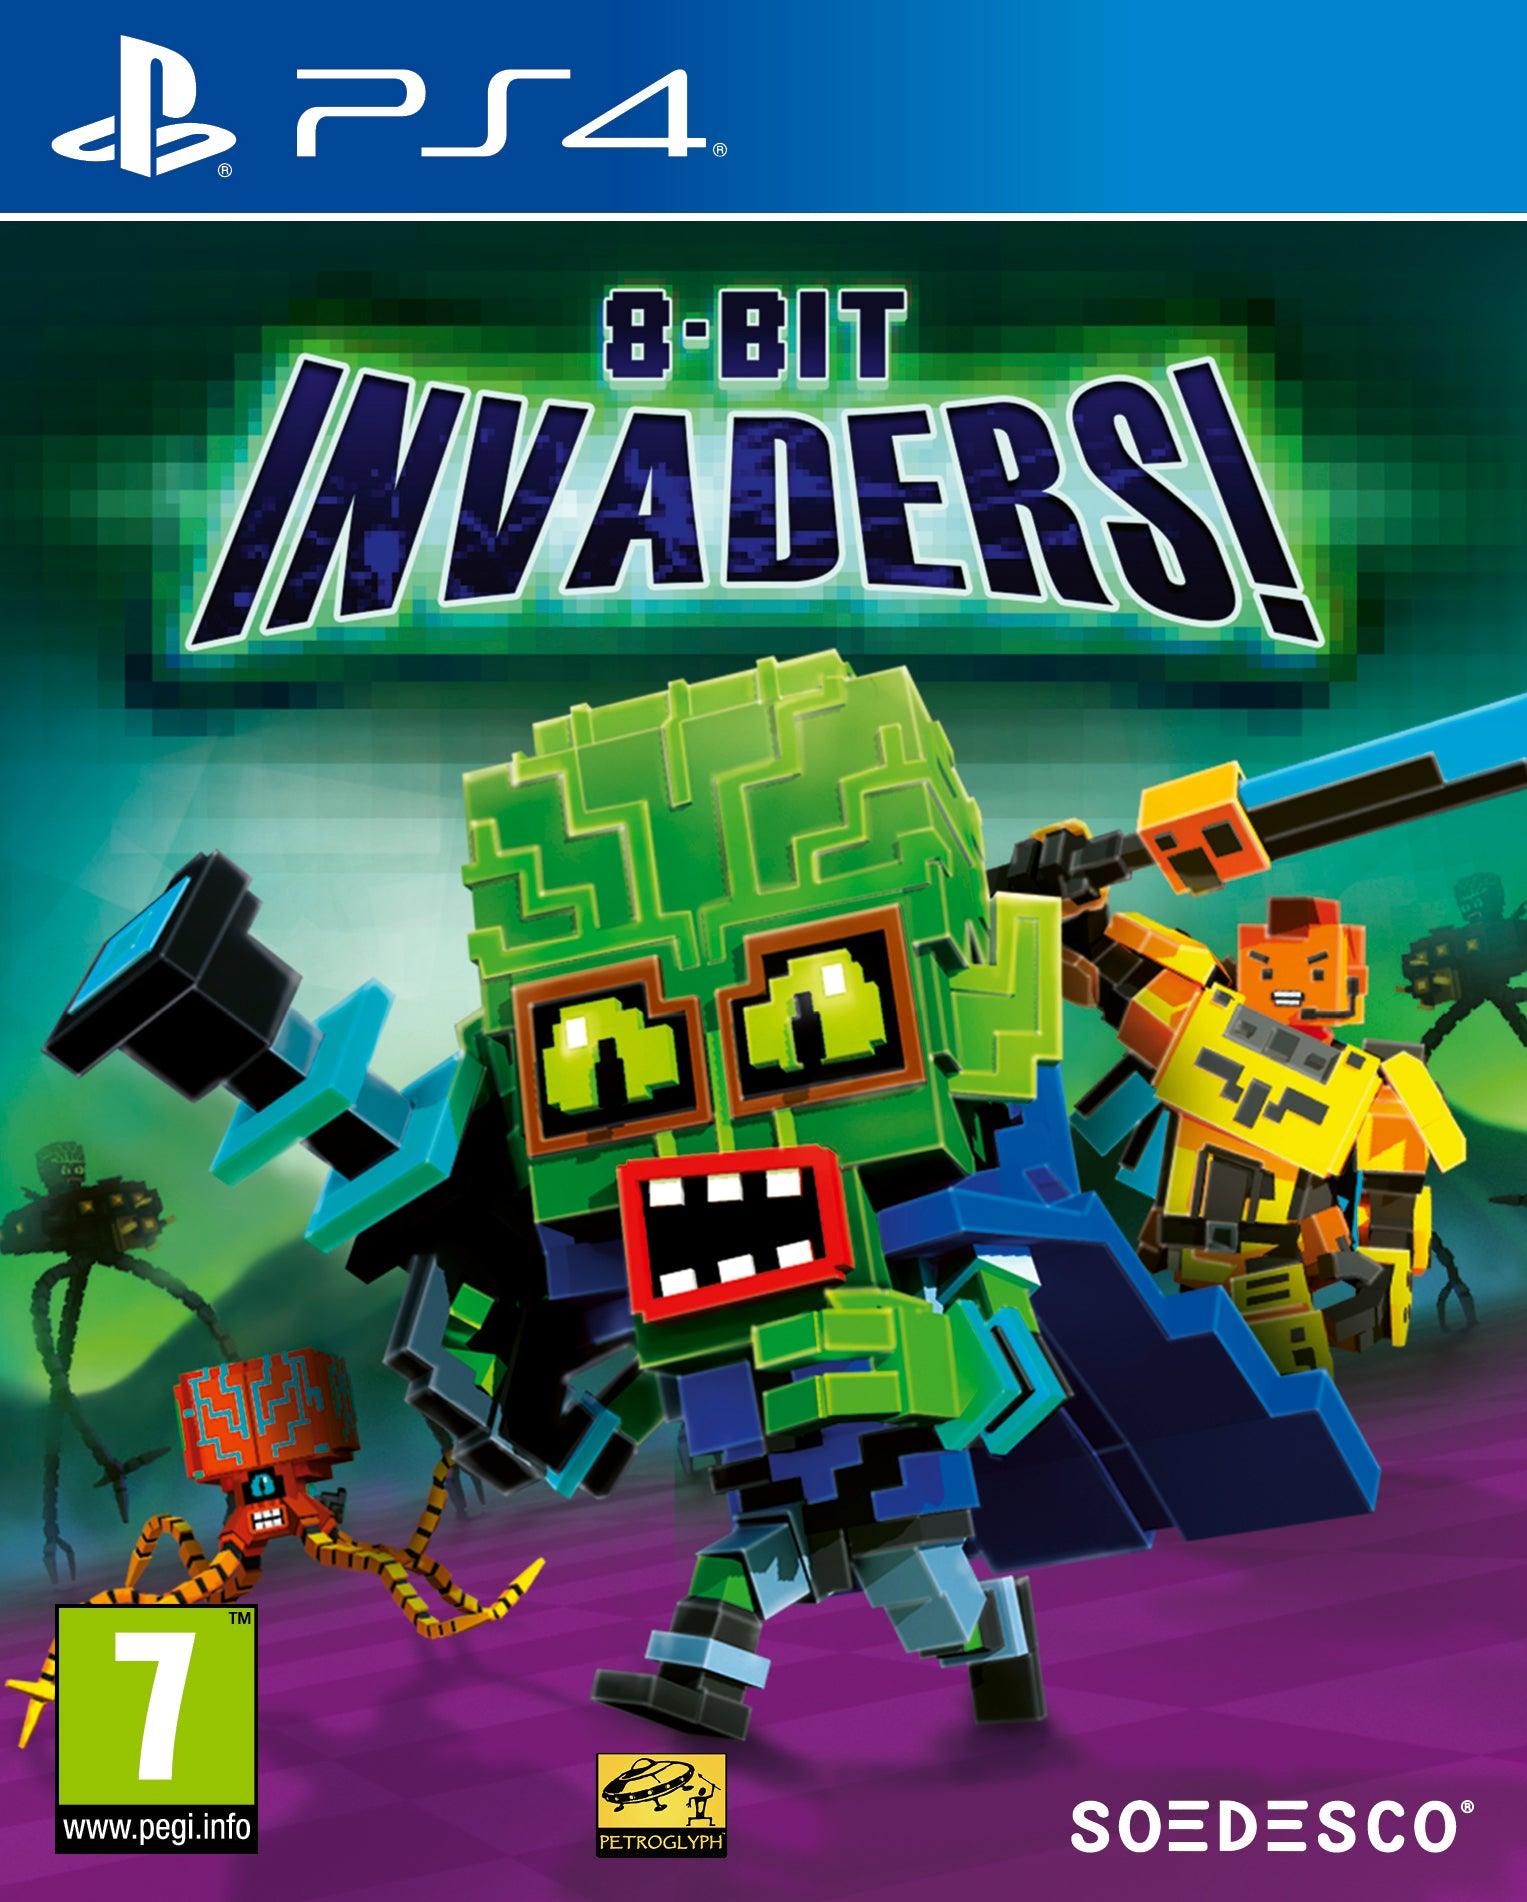 8 Bit Invaders - Want a New Gadget